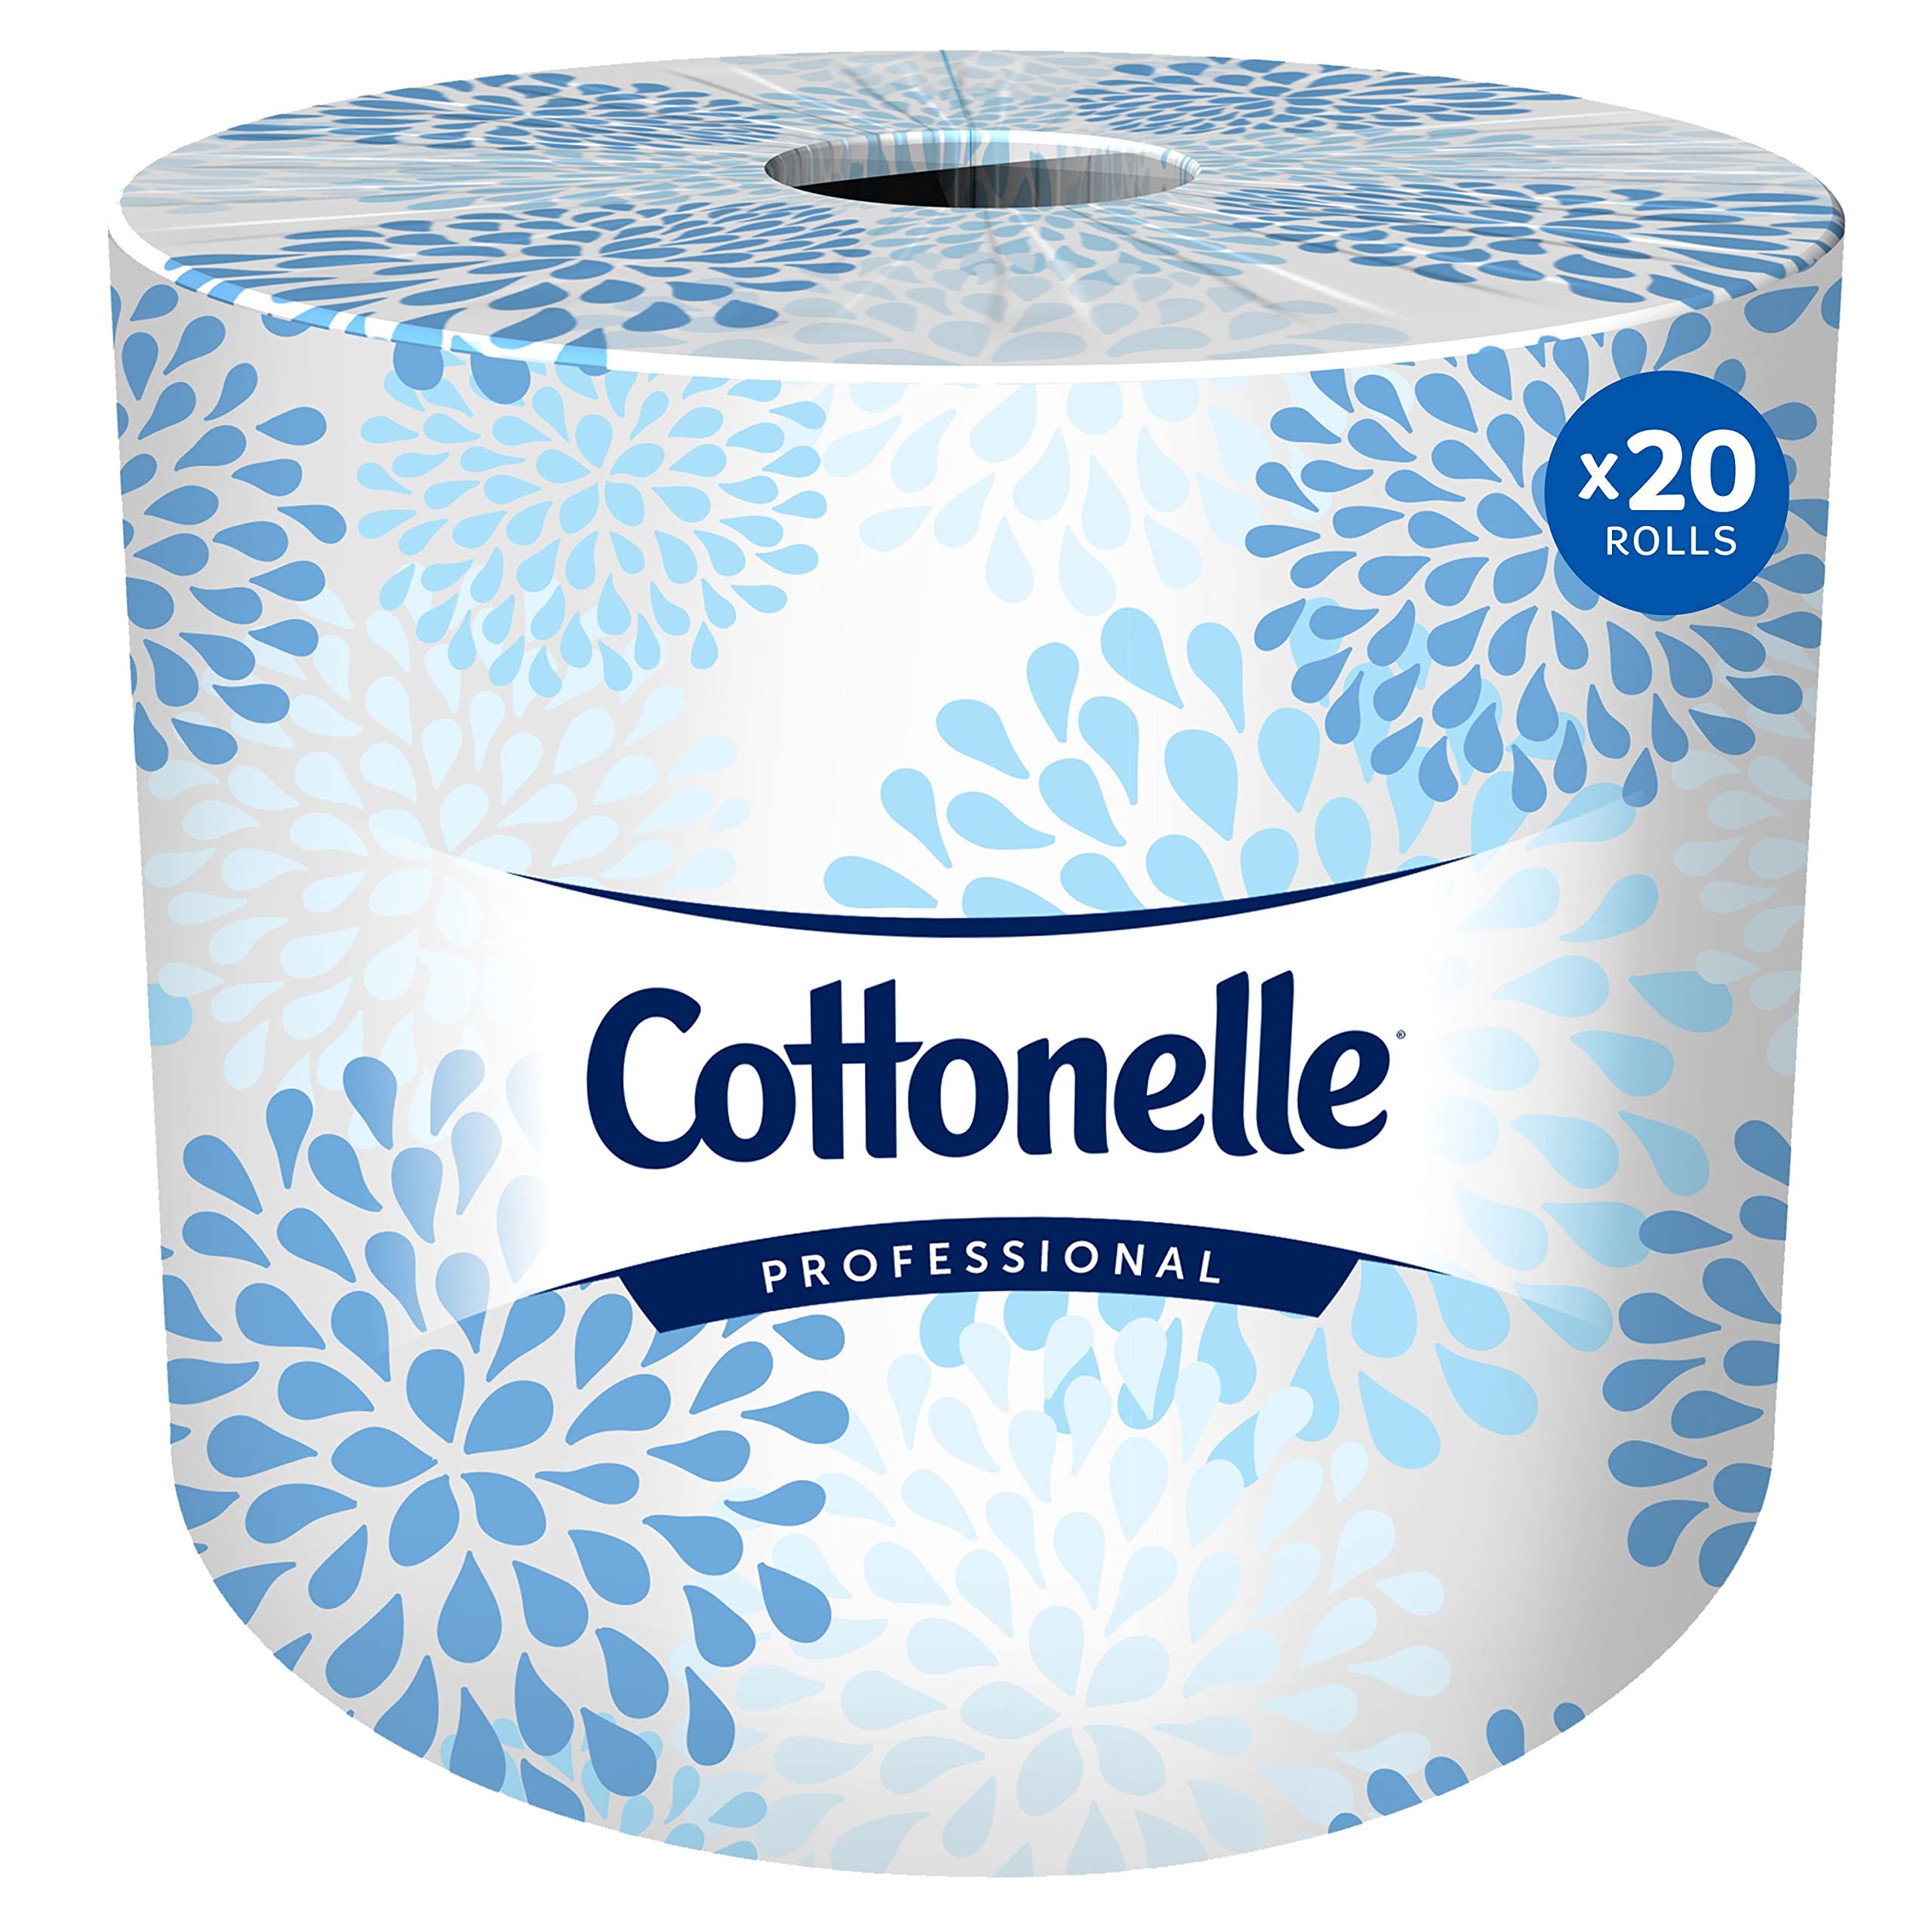 Cottonelle Профессиональная стандартная рулонная туалетная бумага